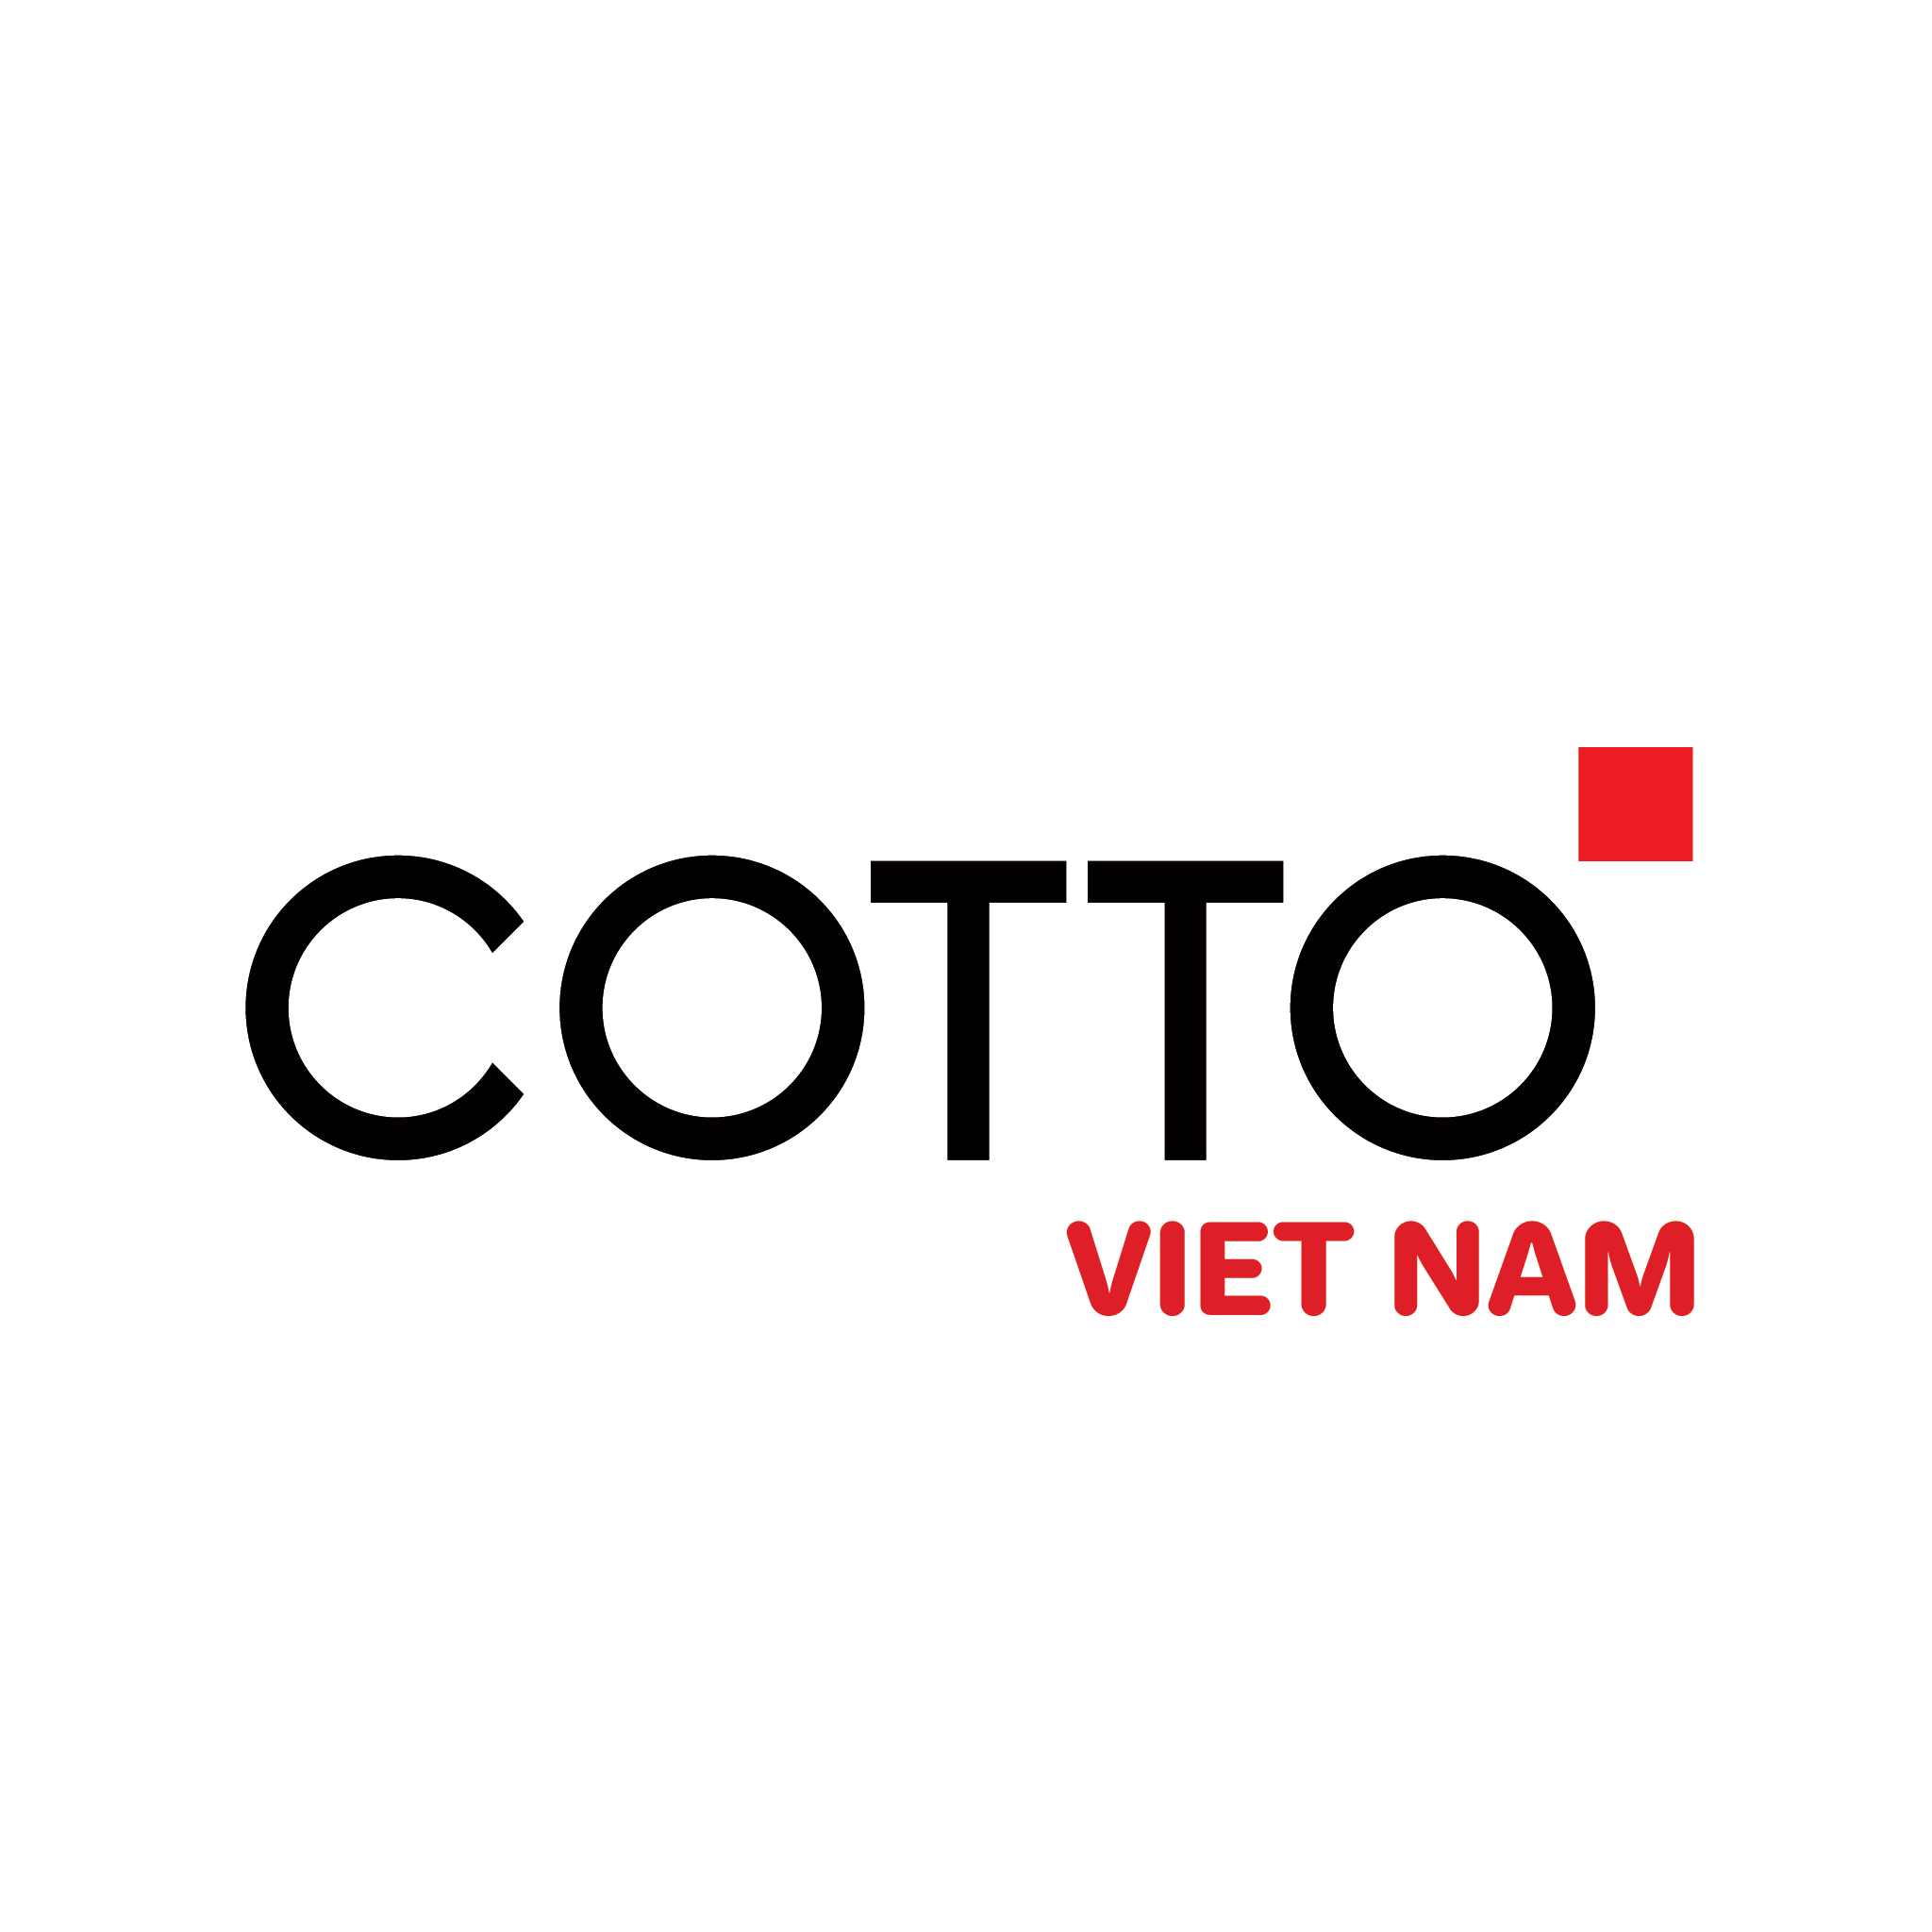 COTTO Viet Nam